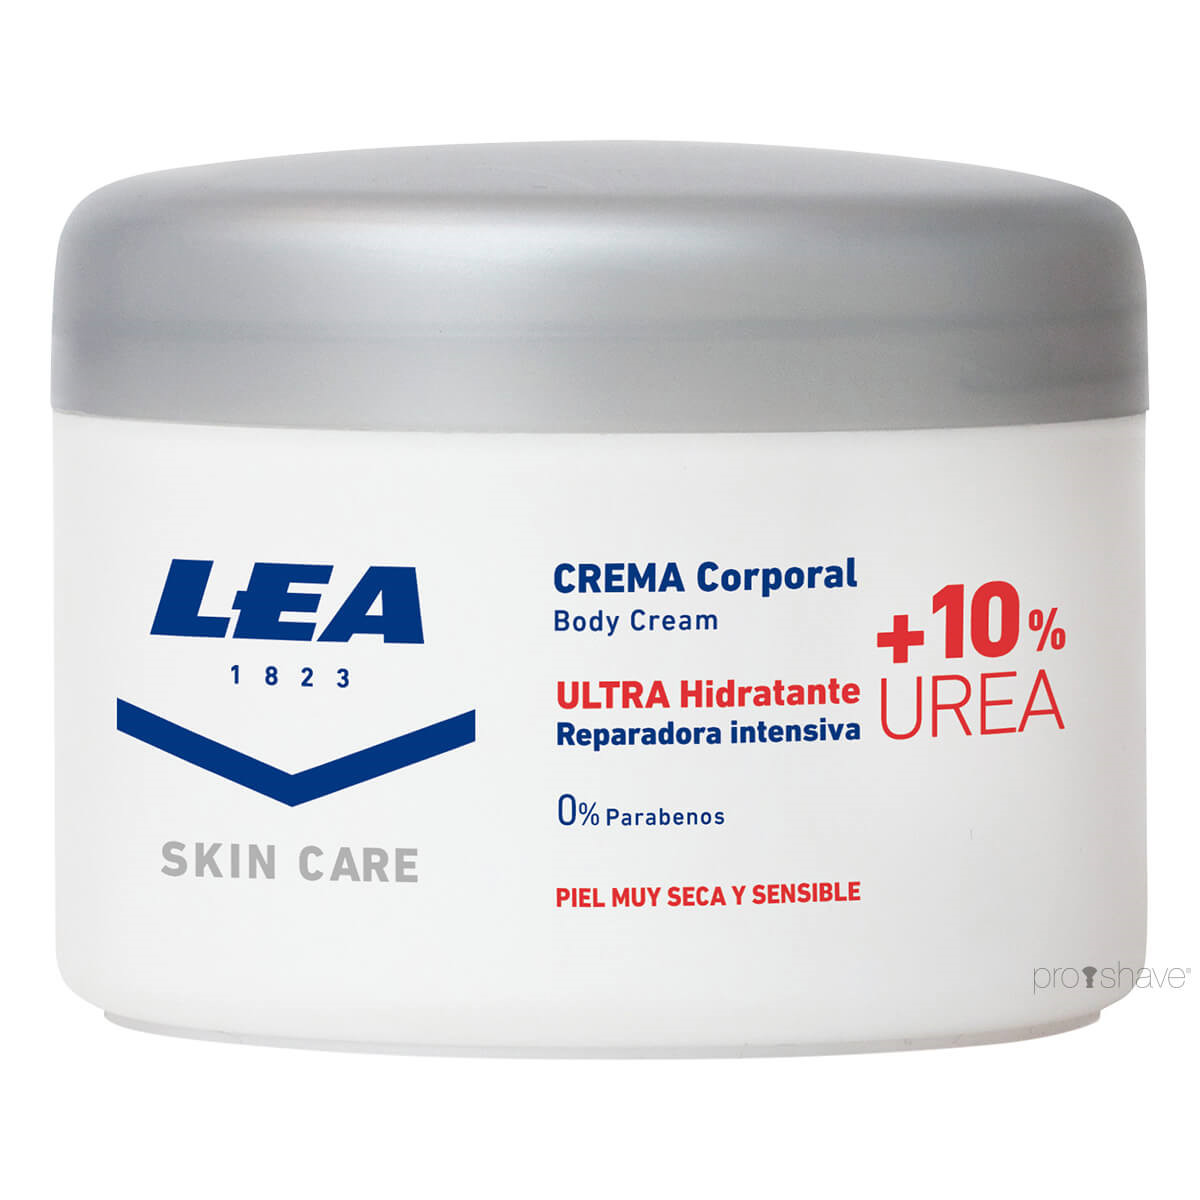 LEA Body Creme, 10% Urea, 200 ml.